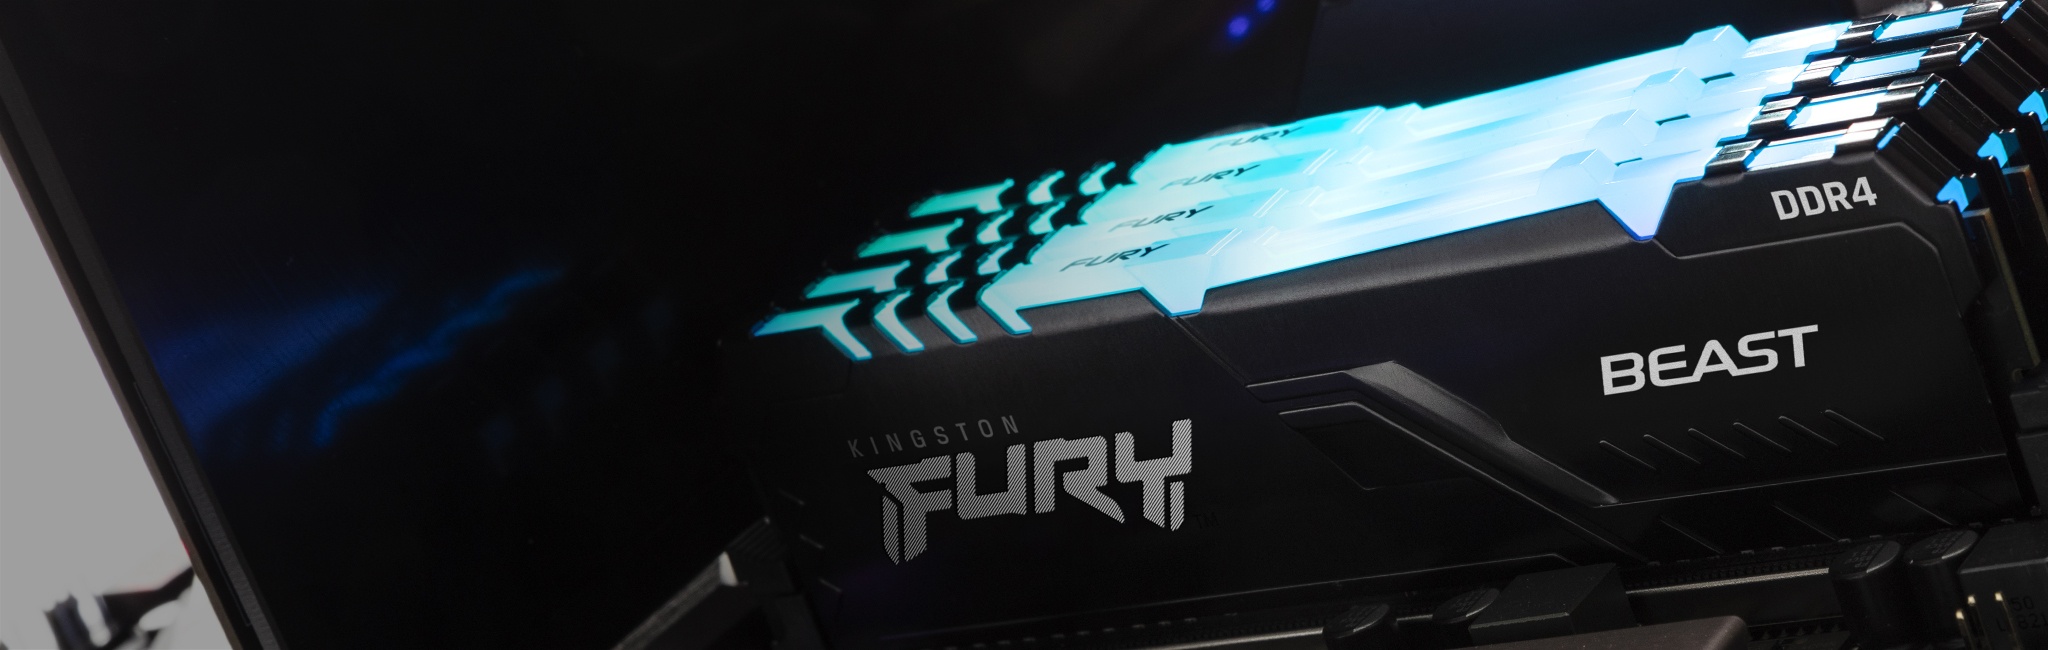 Kingston FURY Beast RGB ที่ติดตั้งอยู่ใน PC พร้อมไฟเรืองแสงสีน้ำเงินจากด้านบนของหน่วยความจำ